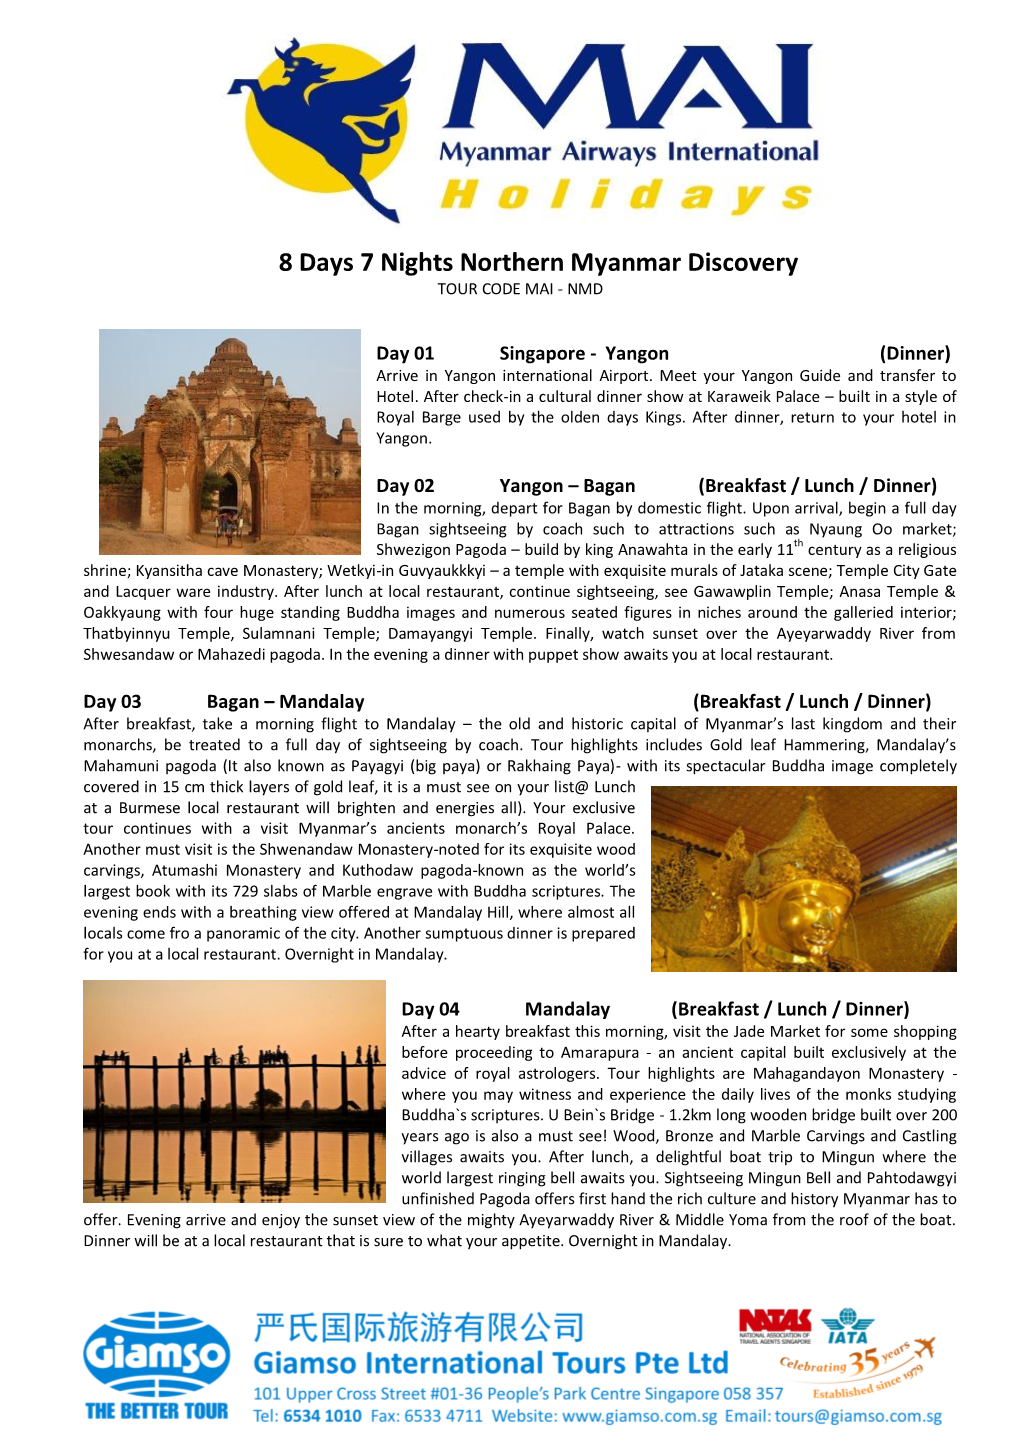 8D7n Northern Myanmar Discovery